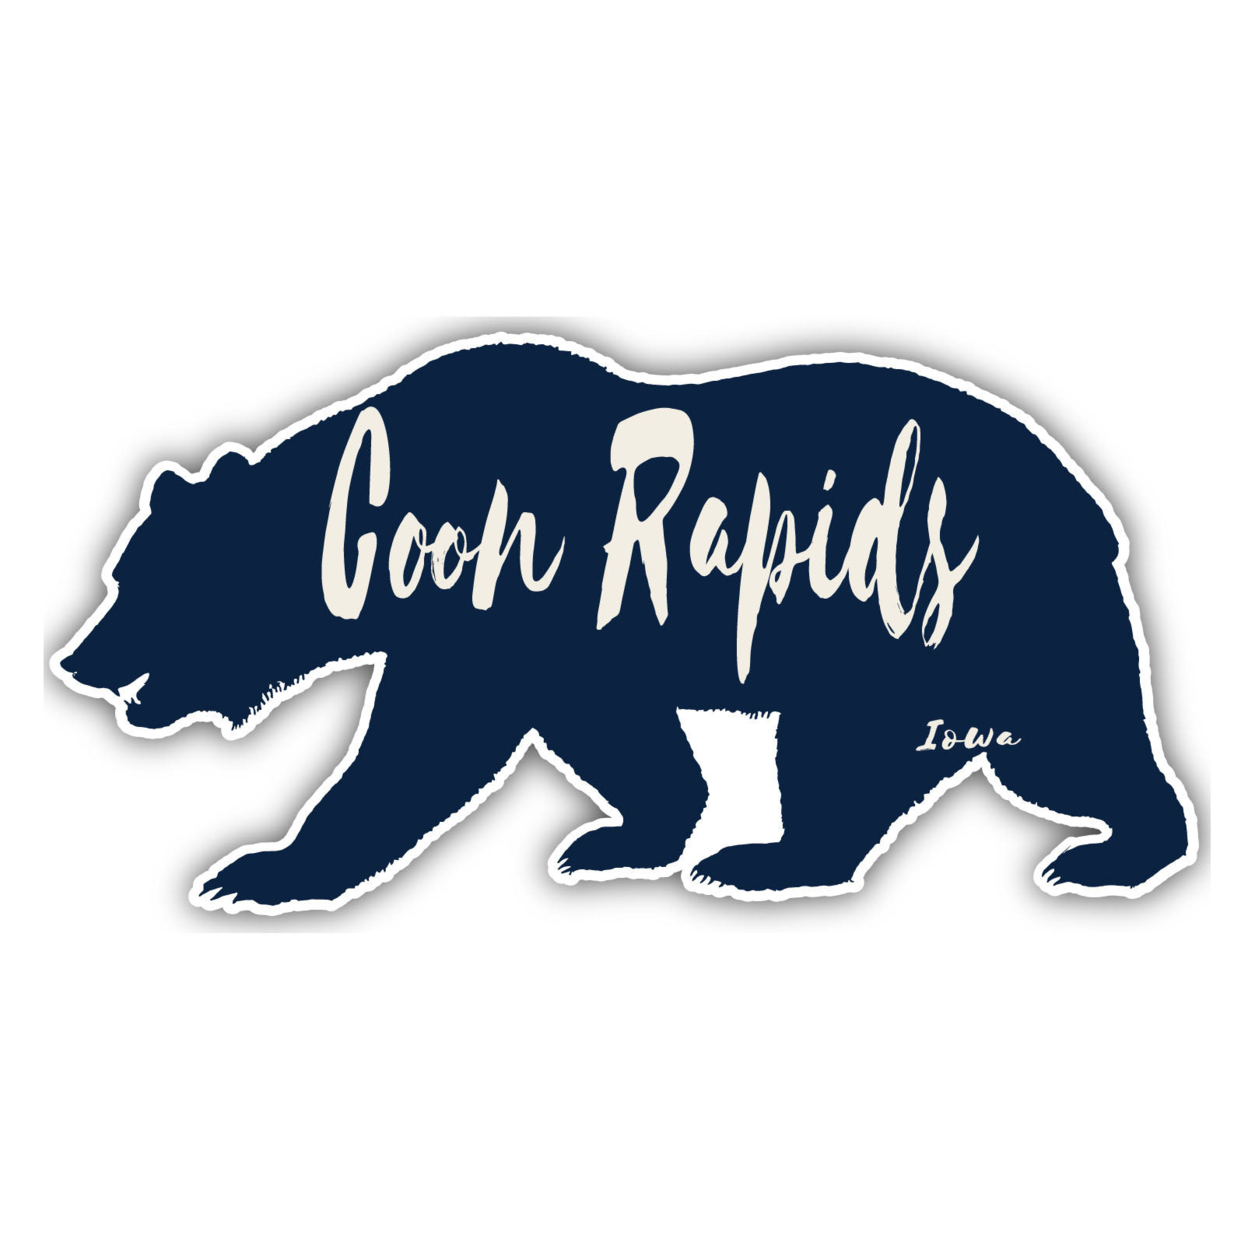 Coon Rapids Iowa Souvenir Decorative Stickers (Choose Theme And Size) - Single Unit, 4-Inch, Bear